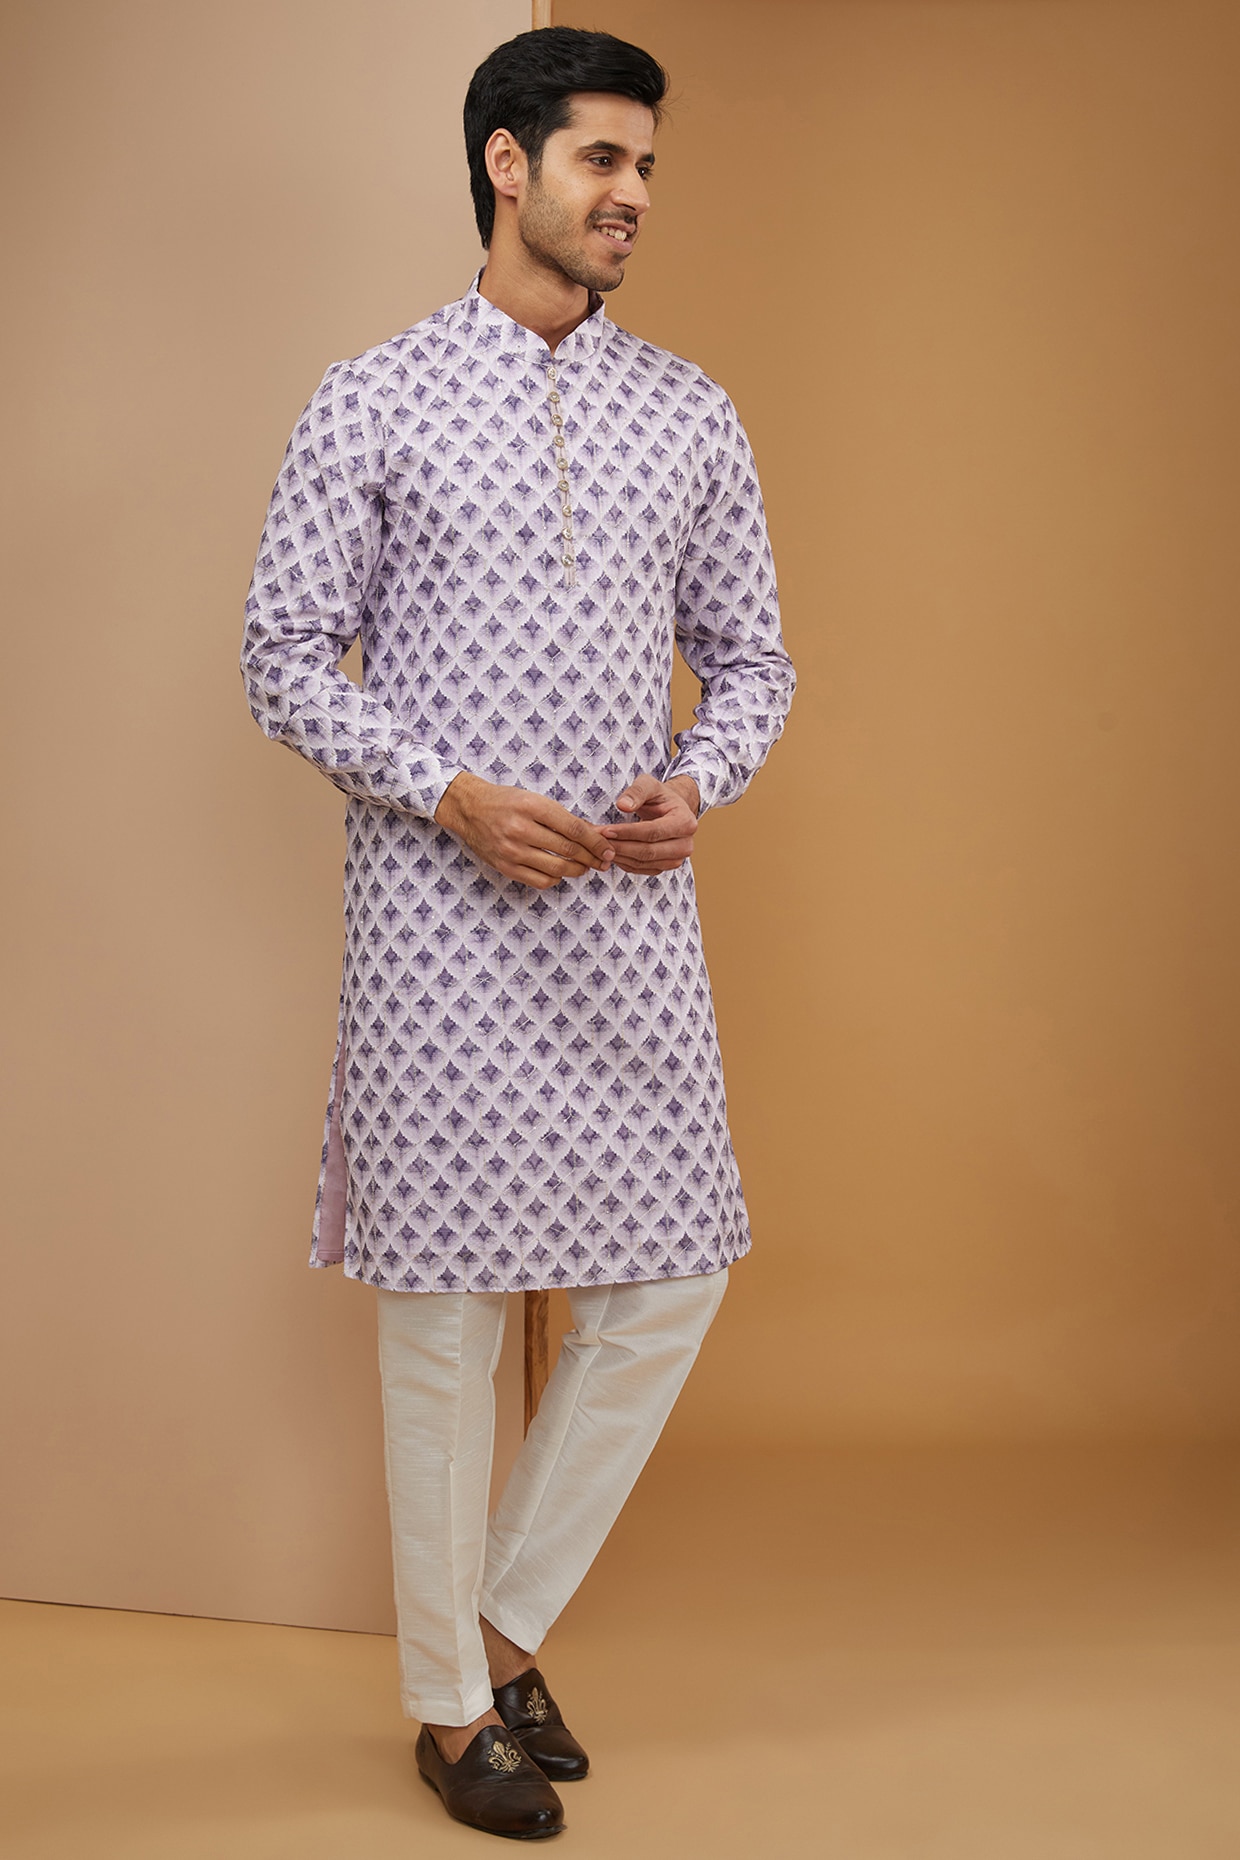 Buy koti for men stylish in India @ Limeroad